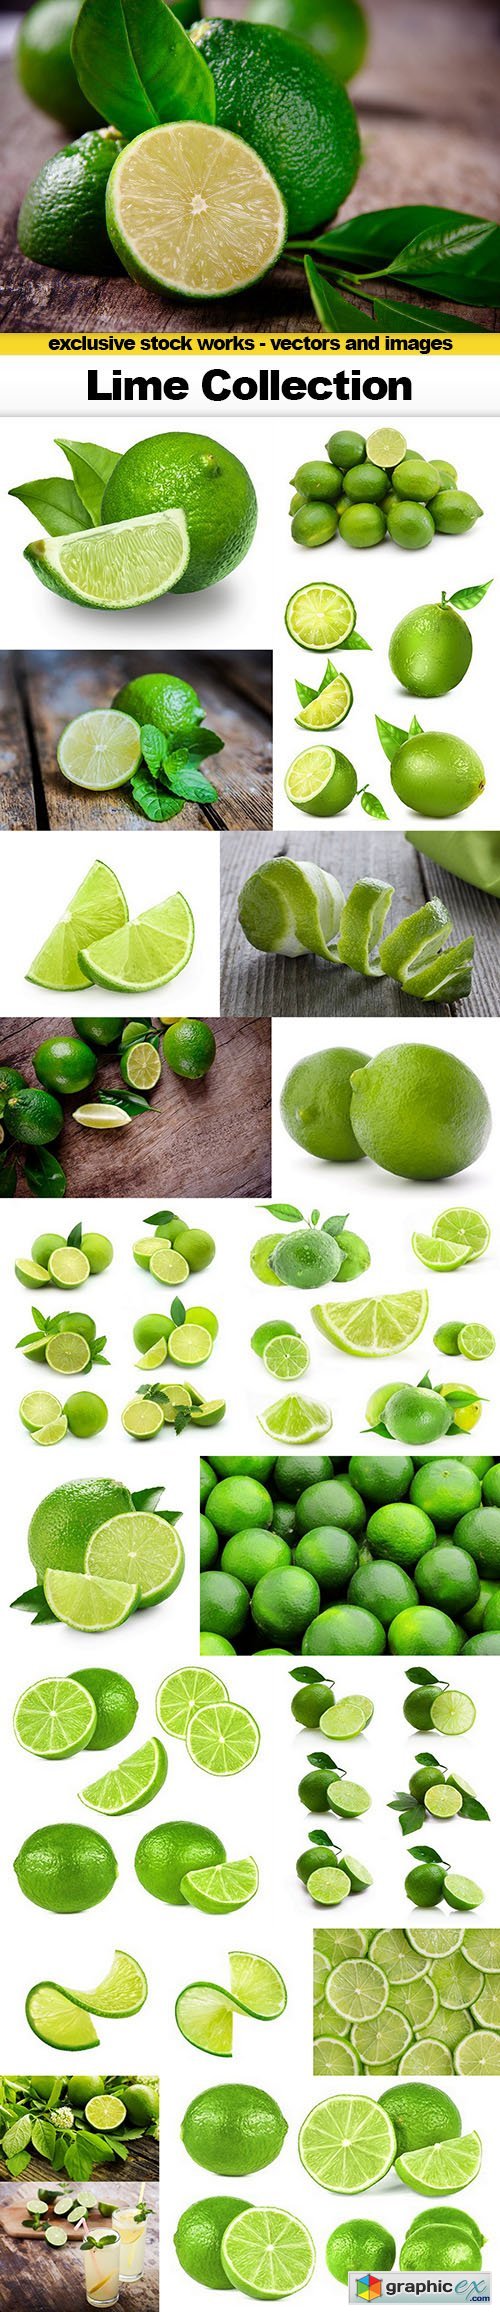 Amazing Lime Collection - 20xUHQ JPEG